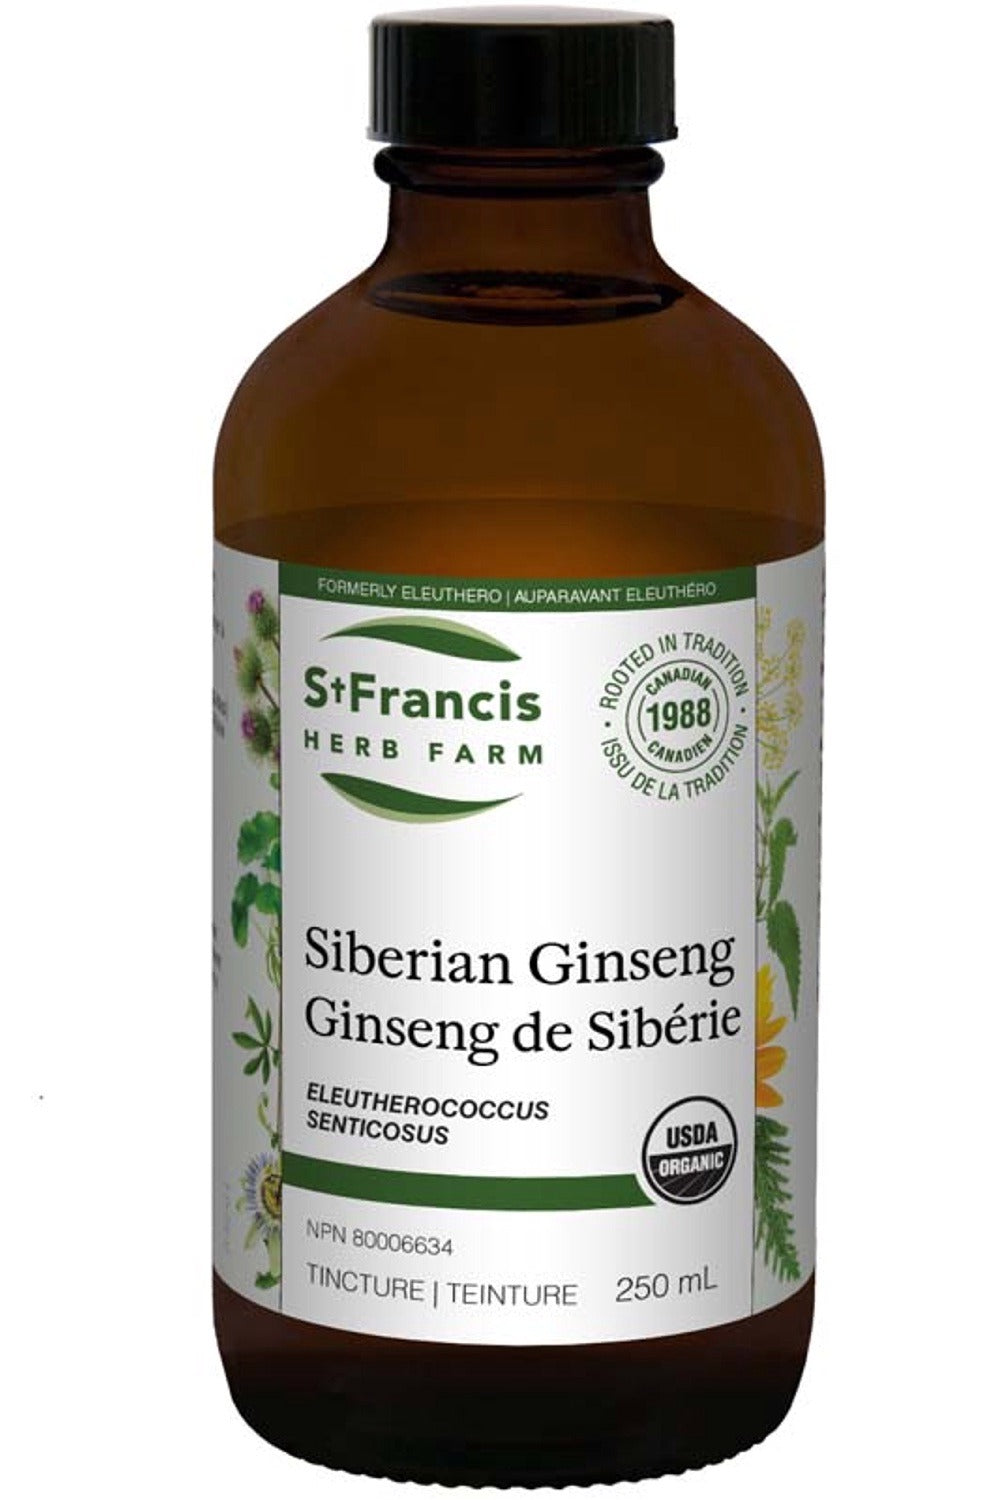 ST FRANCIS HERB FARM Siberian Ginseng (Eleuthero - 250 ml)